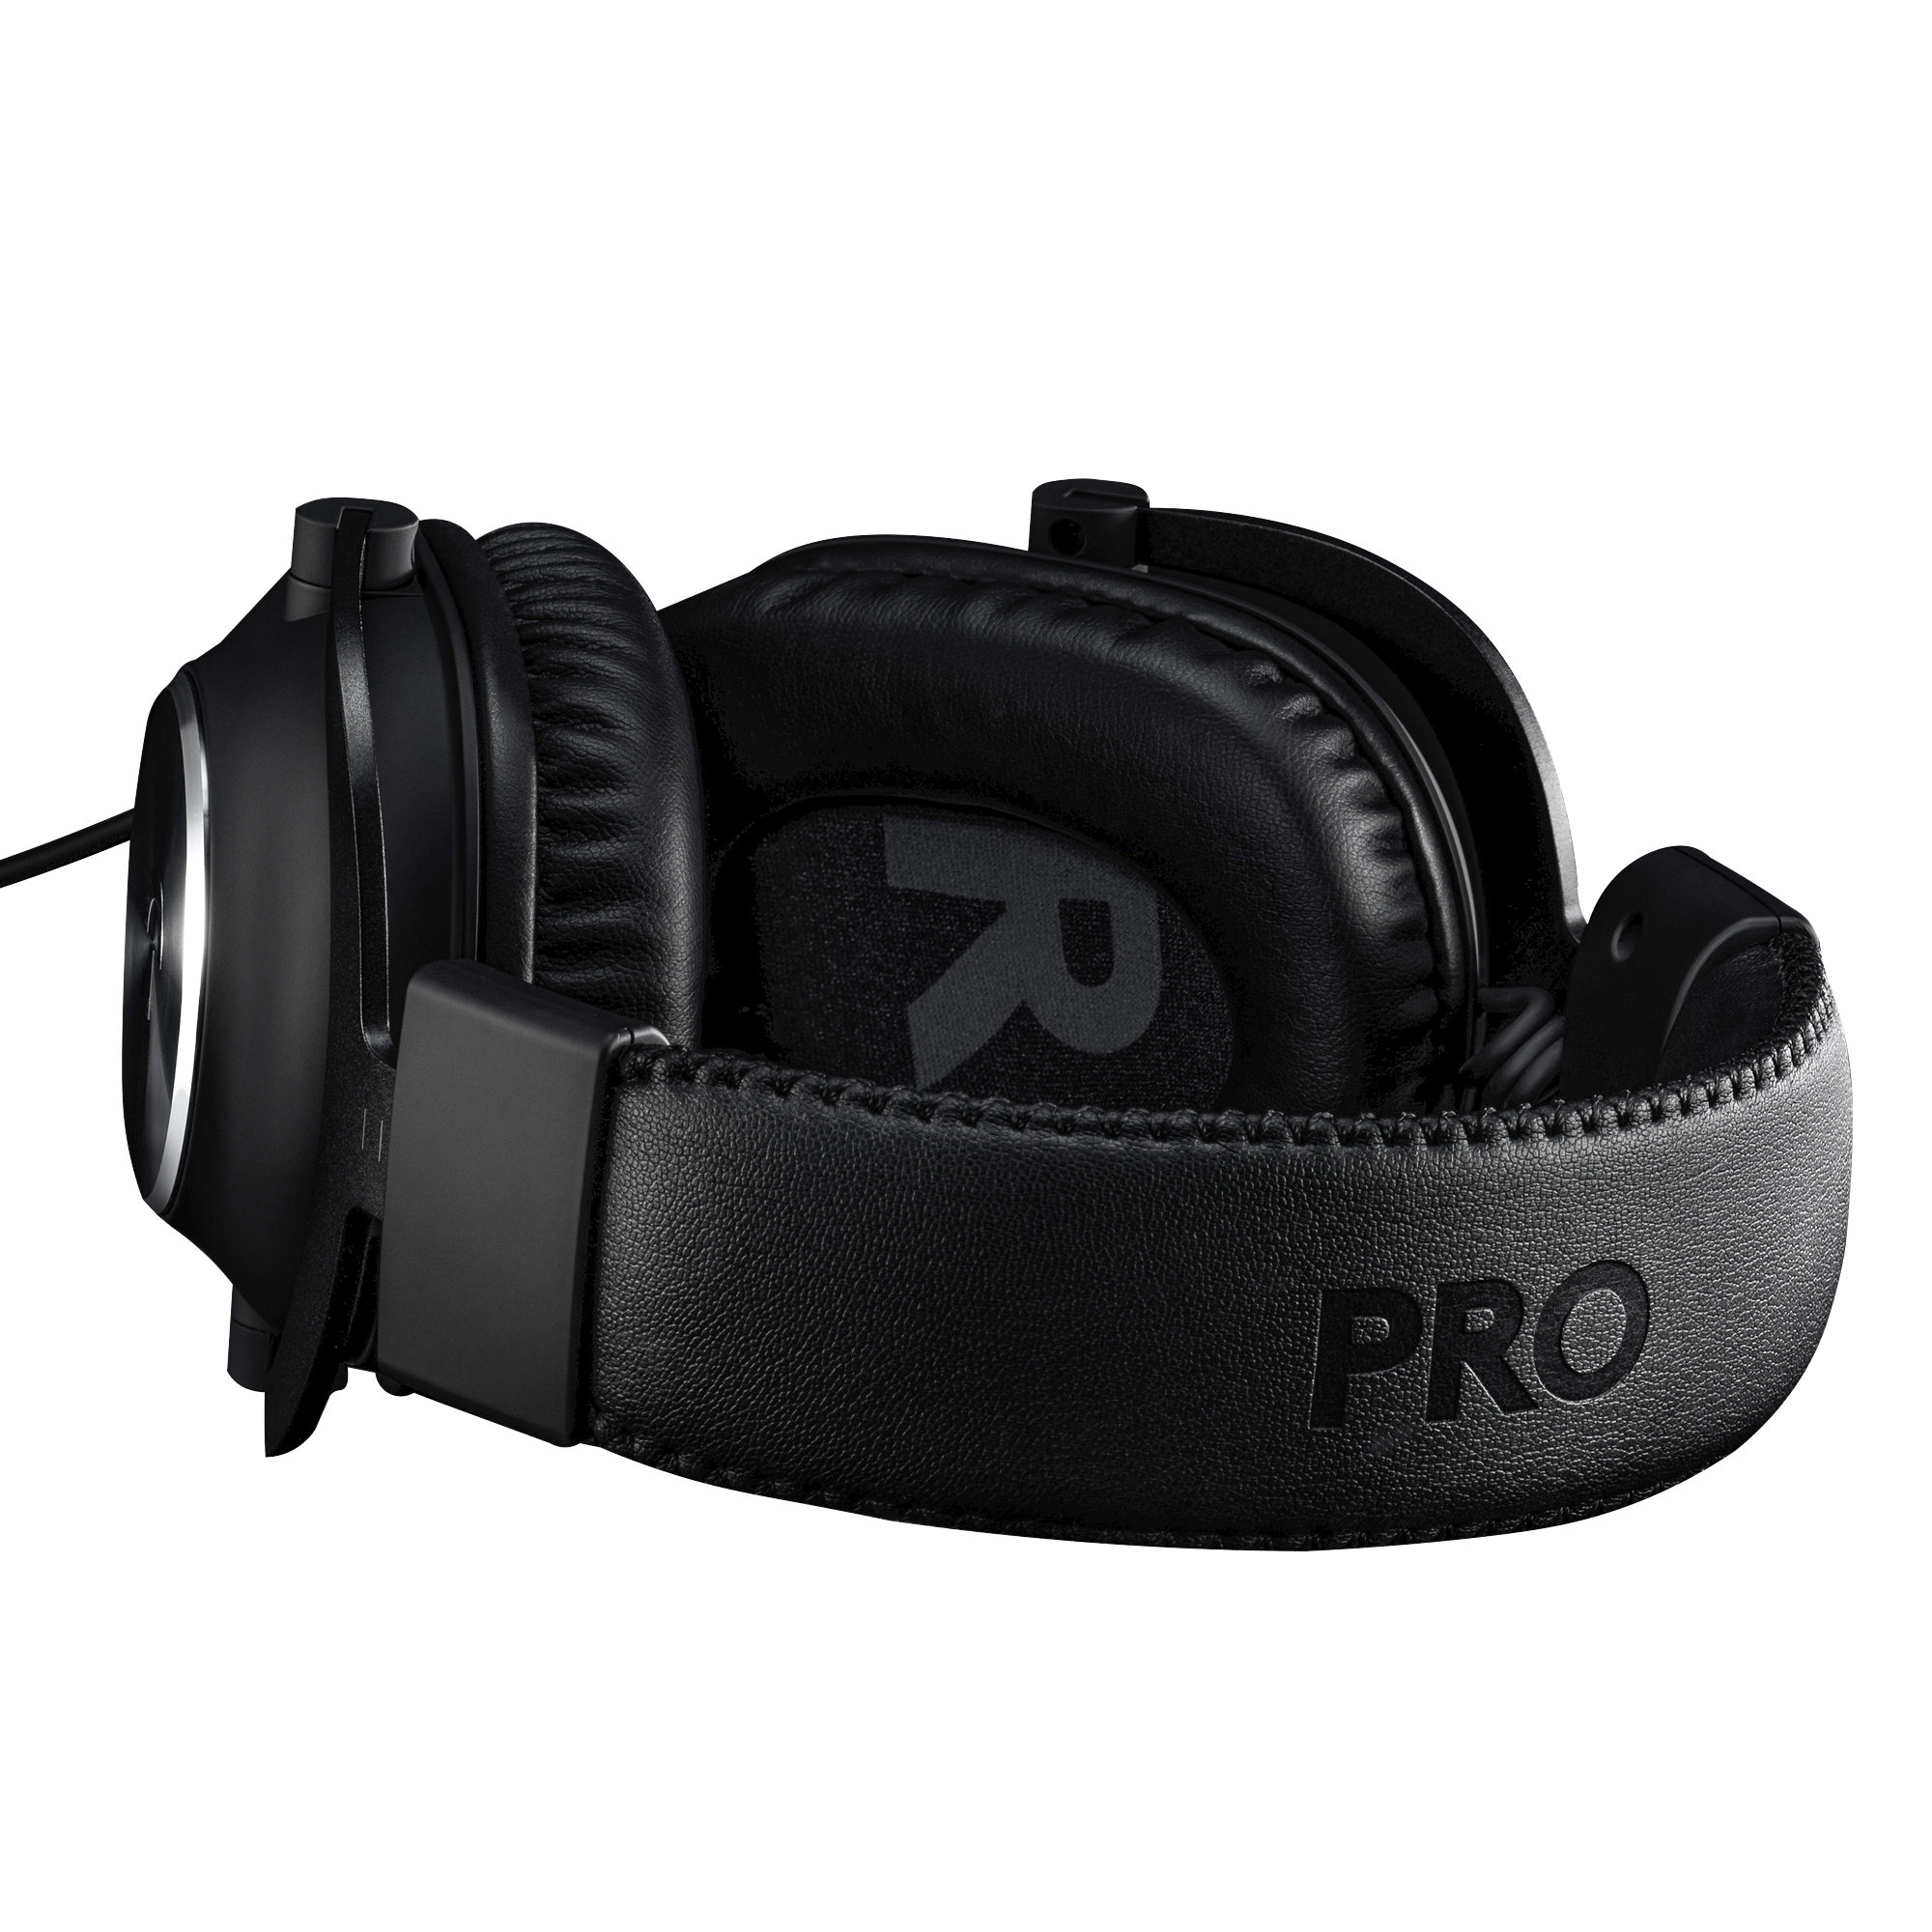 Наушники Logitech g Pro x. Headset: Logitech g Pro x (wired). Logitech Pro New Black 981-000812. Наушники игровые USB Logitech g Pro (981-000812.